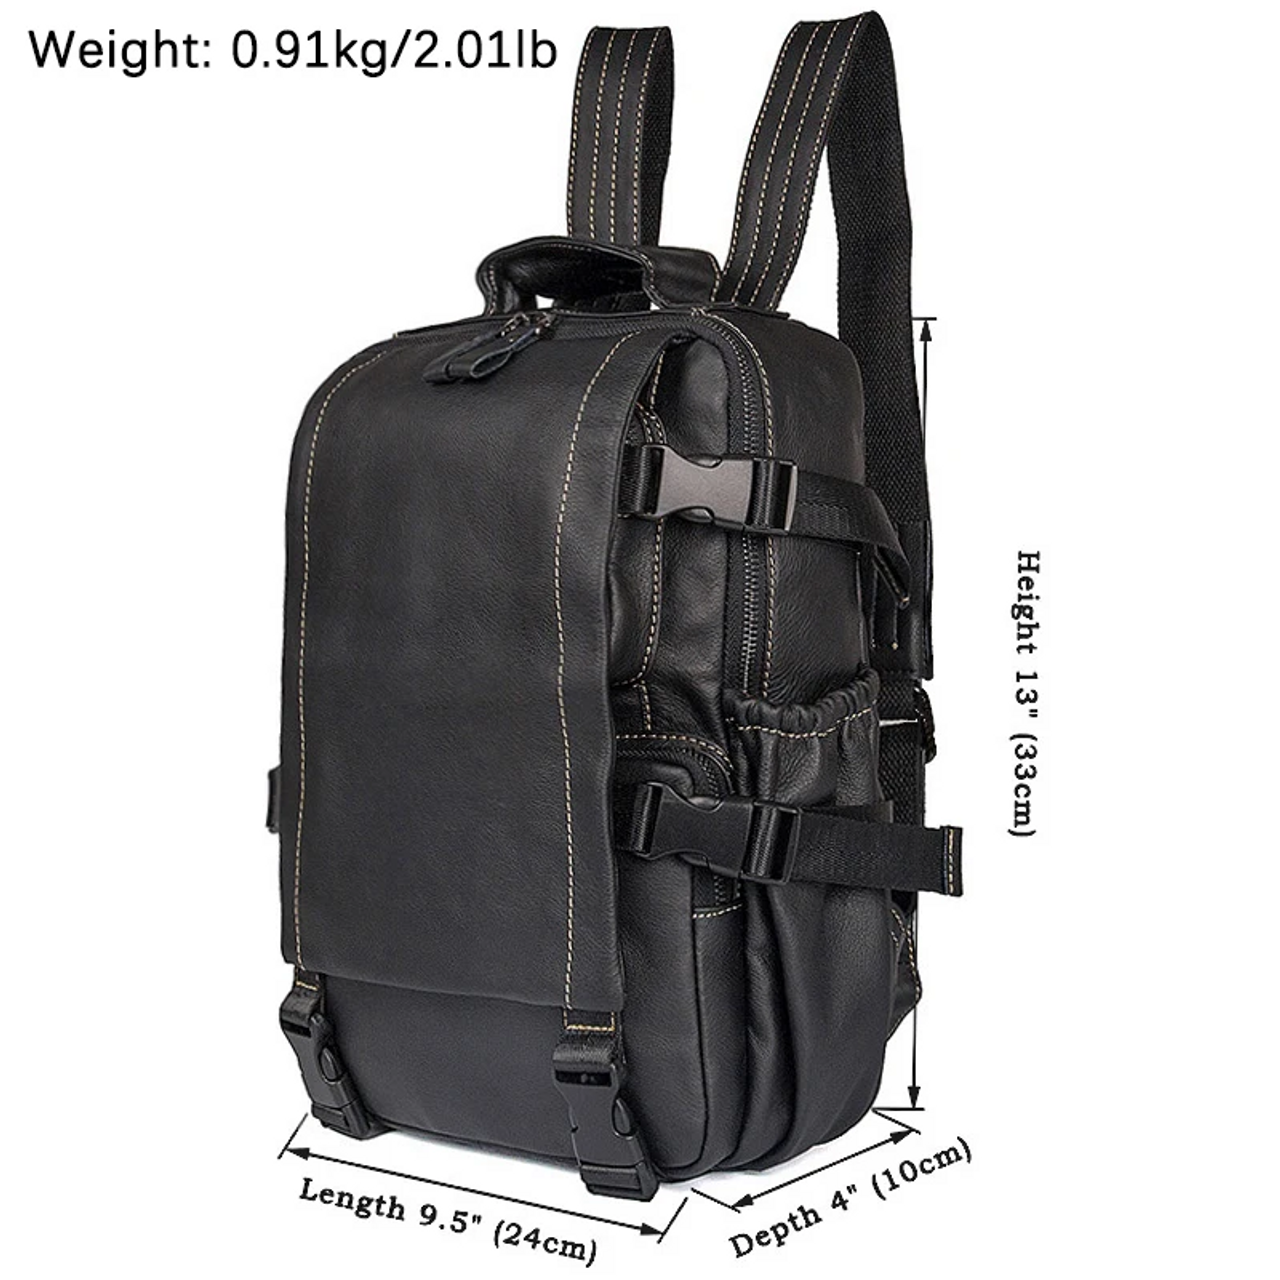 Large Capacity Black Leather Laptop Backpack